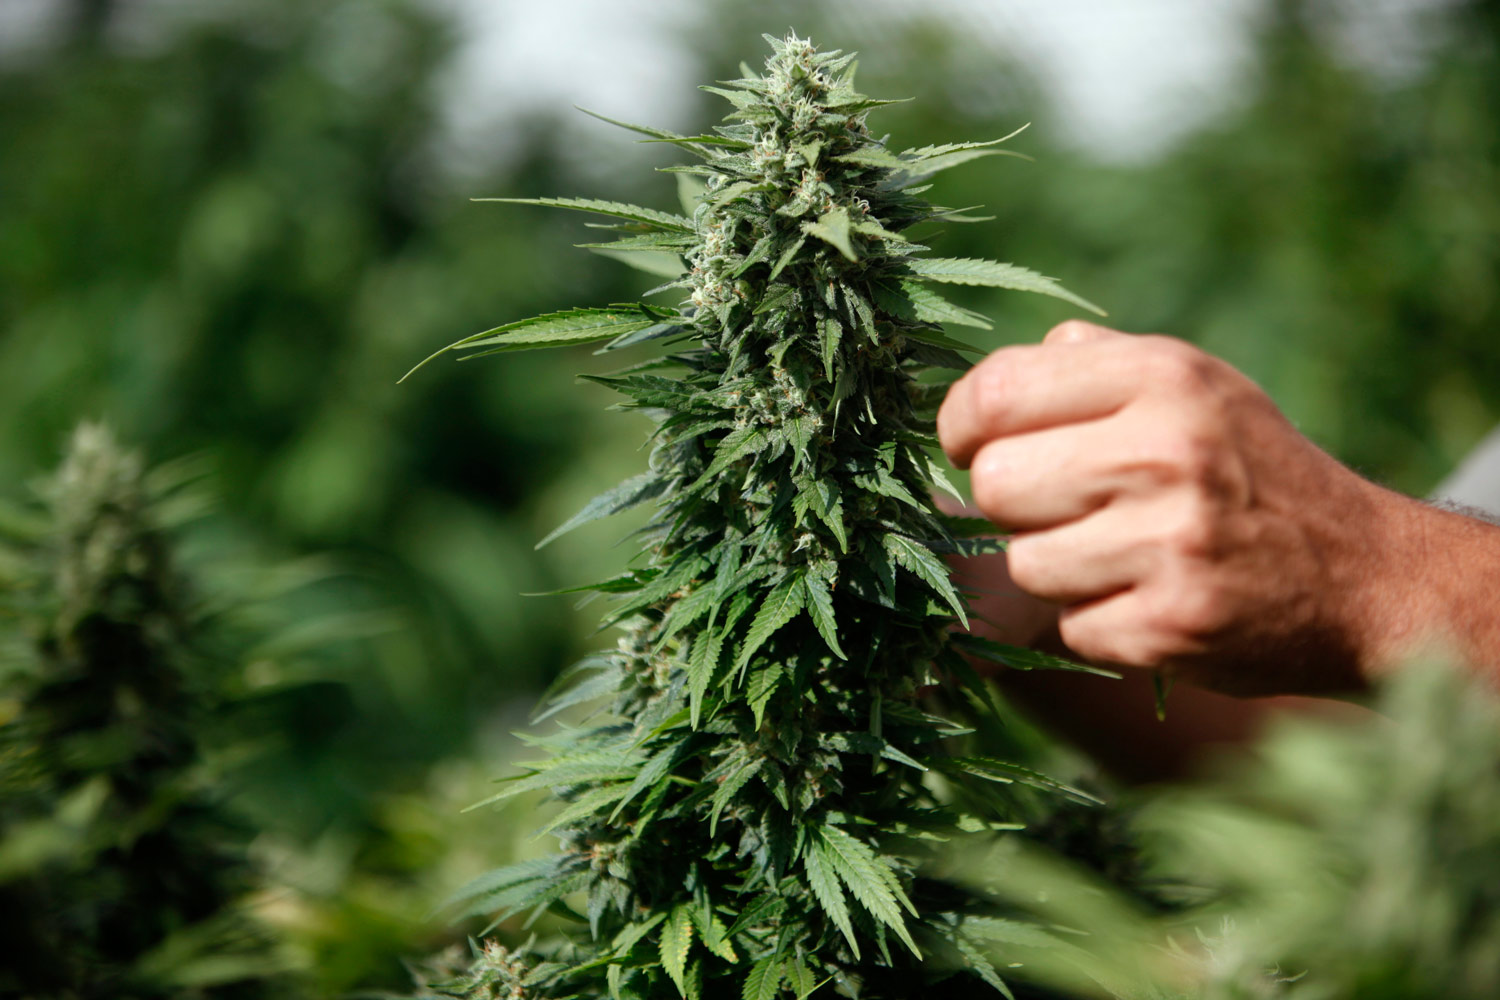  Amorosi, scoperta piantagione di marijuana: arrestato 33enne